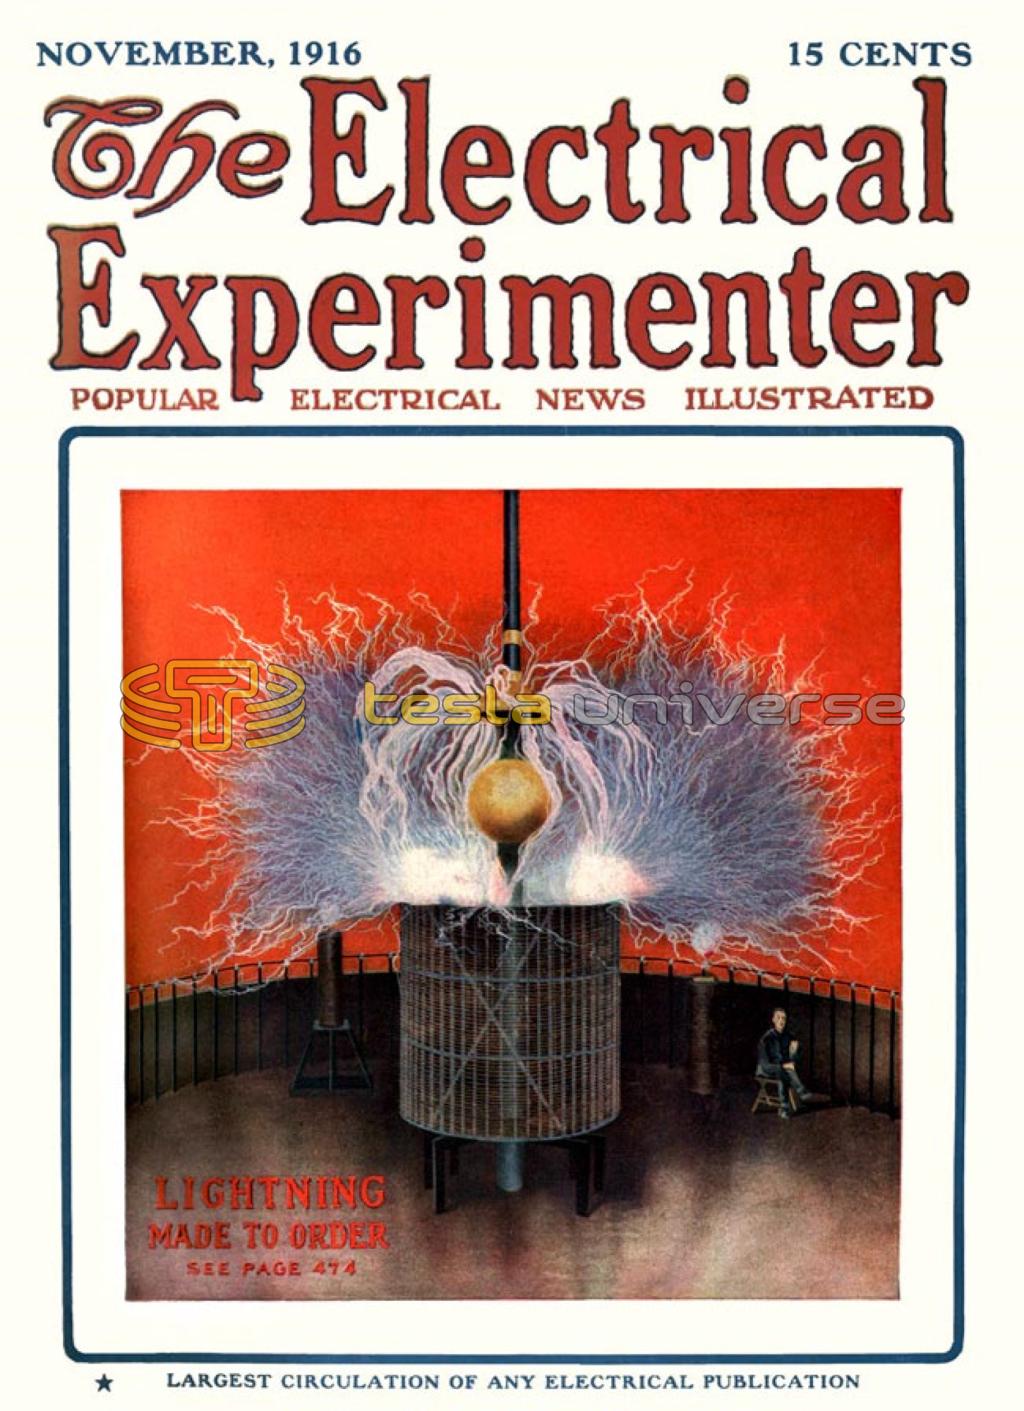 Nikola Tesla's Colorado Springs coil illustration cover of Electrical Experimenter magazine